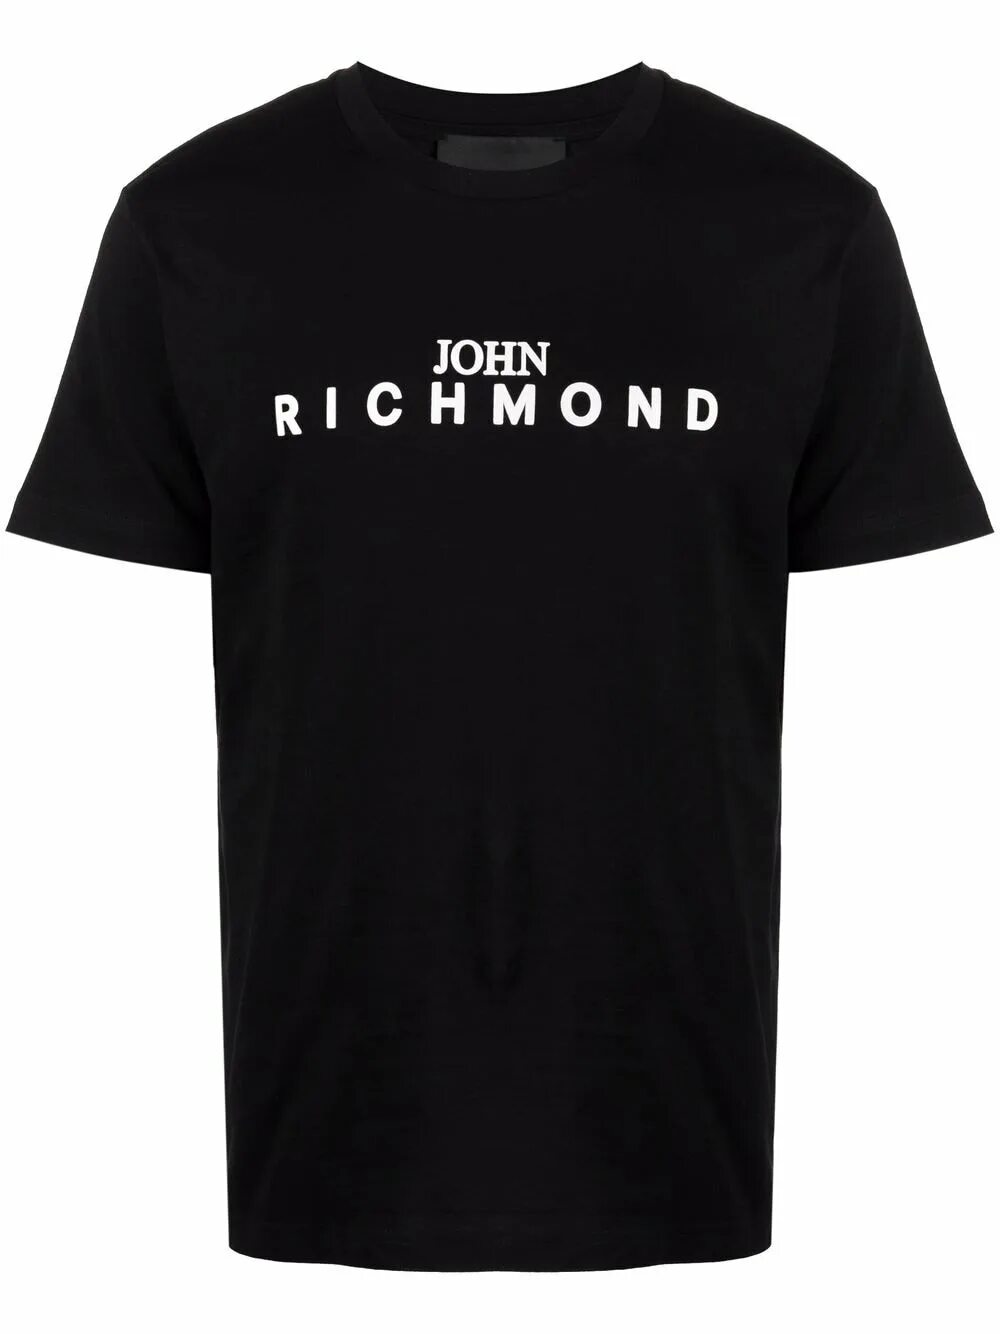 John Richmond футболка. Джон Ричмонд футболка мужская. John Richmond футболка с логотипом. John Richmond logo футболка мужская.